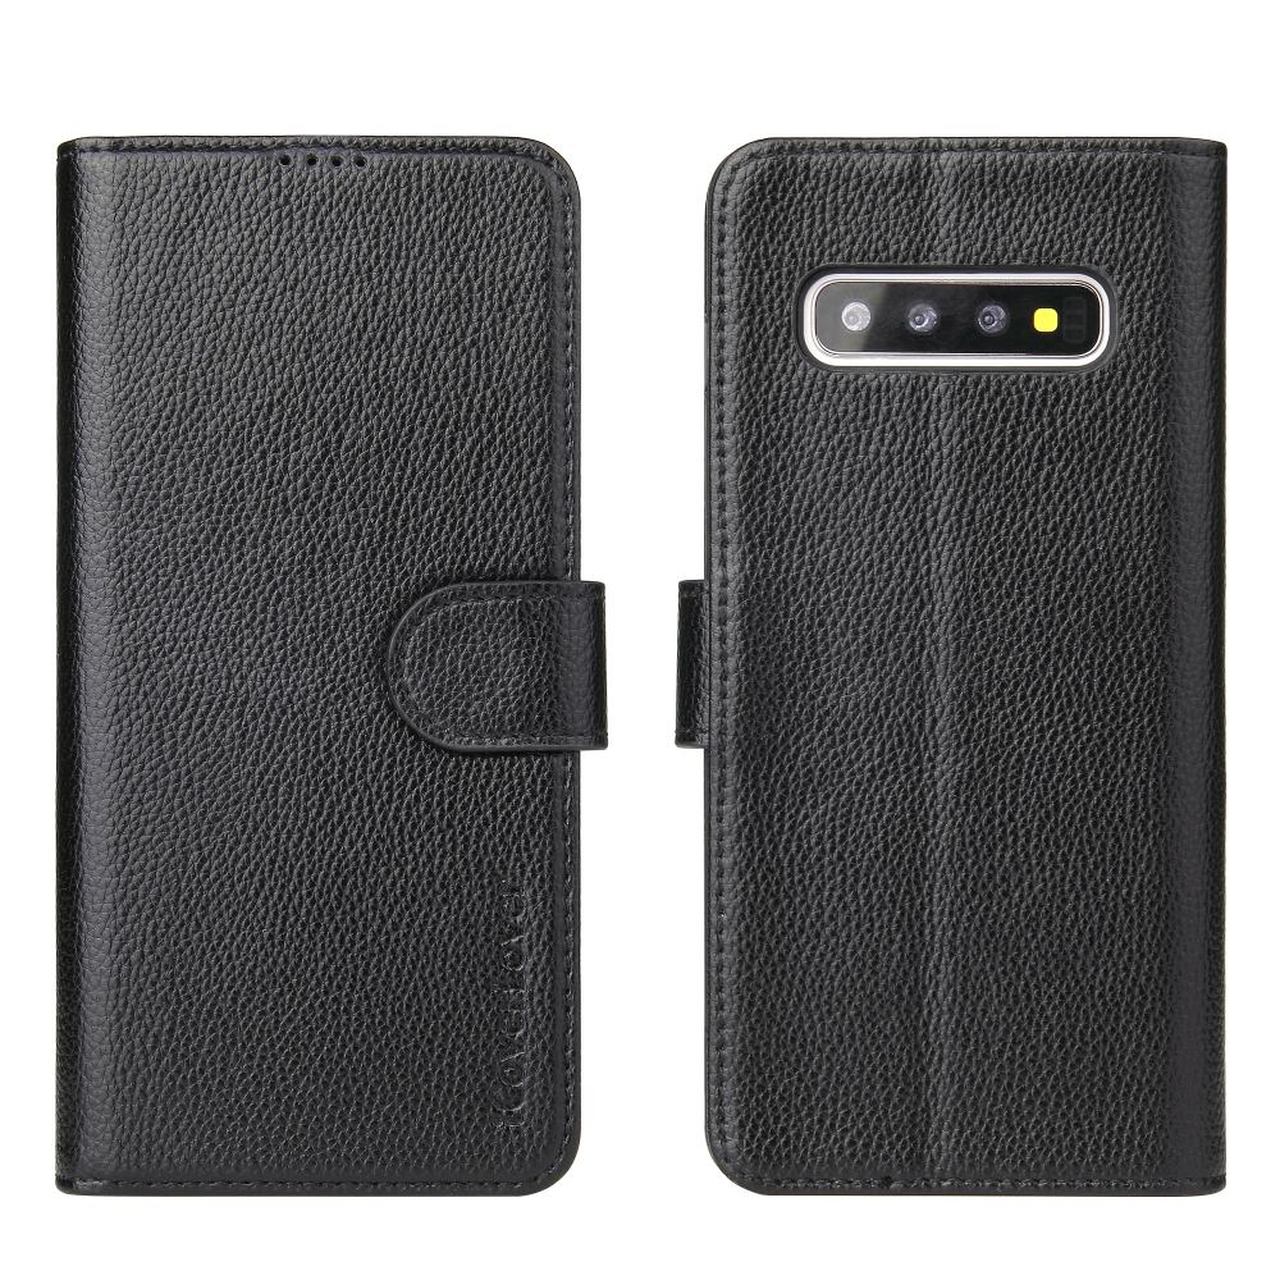 Samsung Galaxy S10 Case Black iCoverLover Genuine Cow Leather Wallet